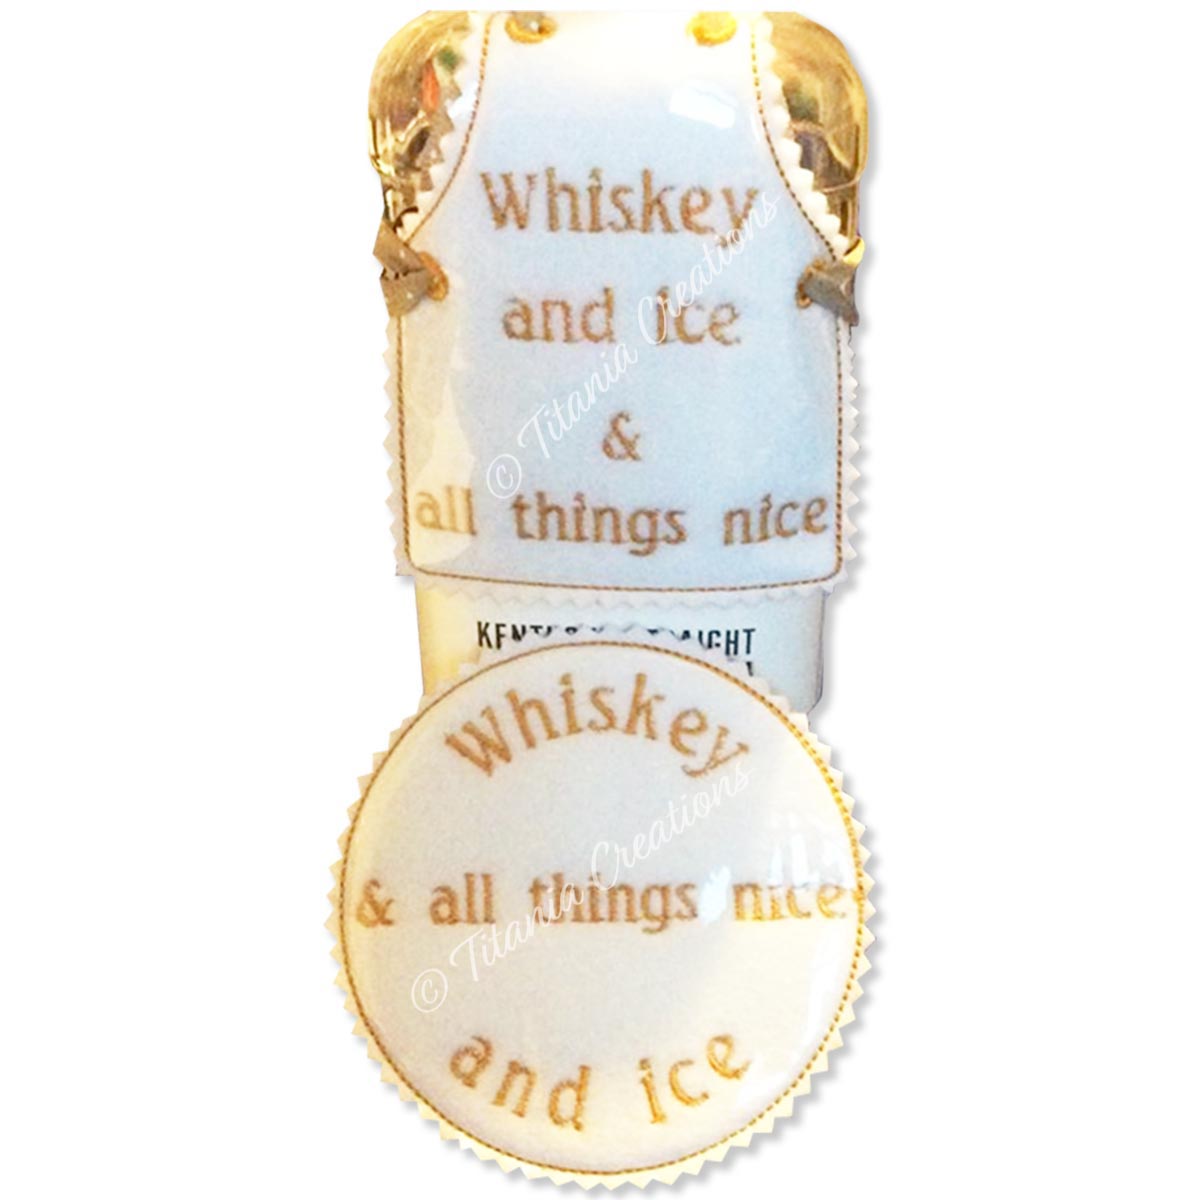 ITH Whiskey / Whisky Bottle Apron and Coaster 4x4